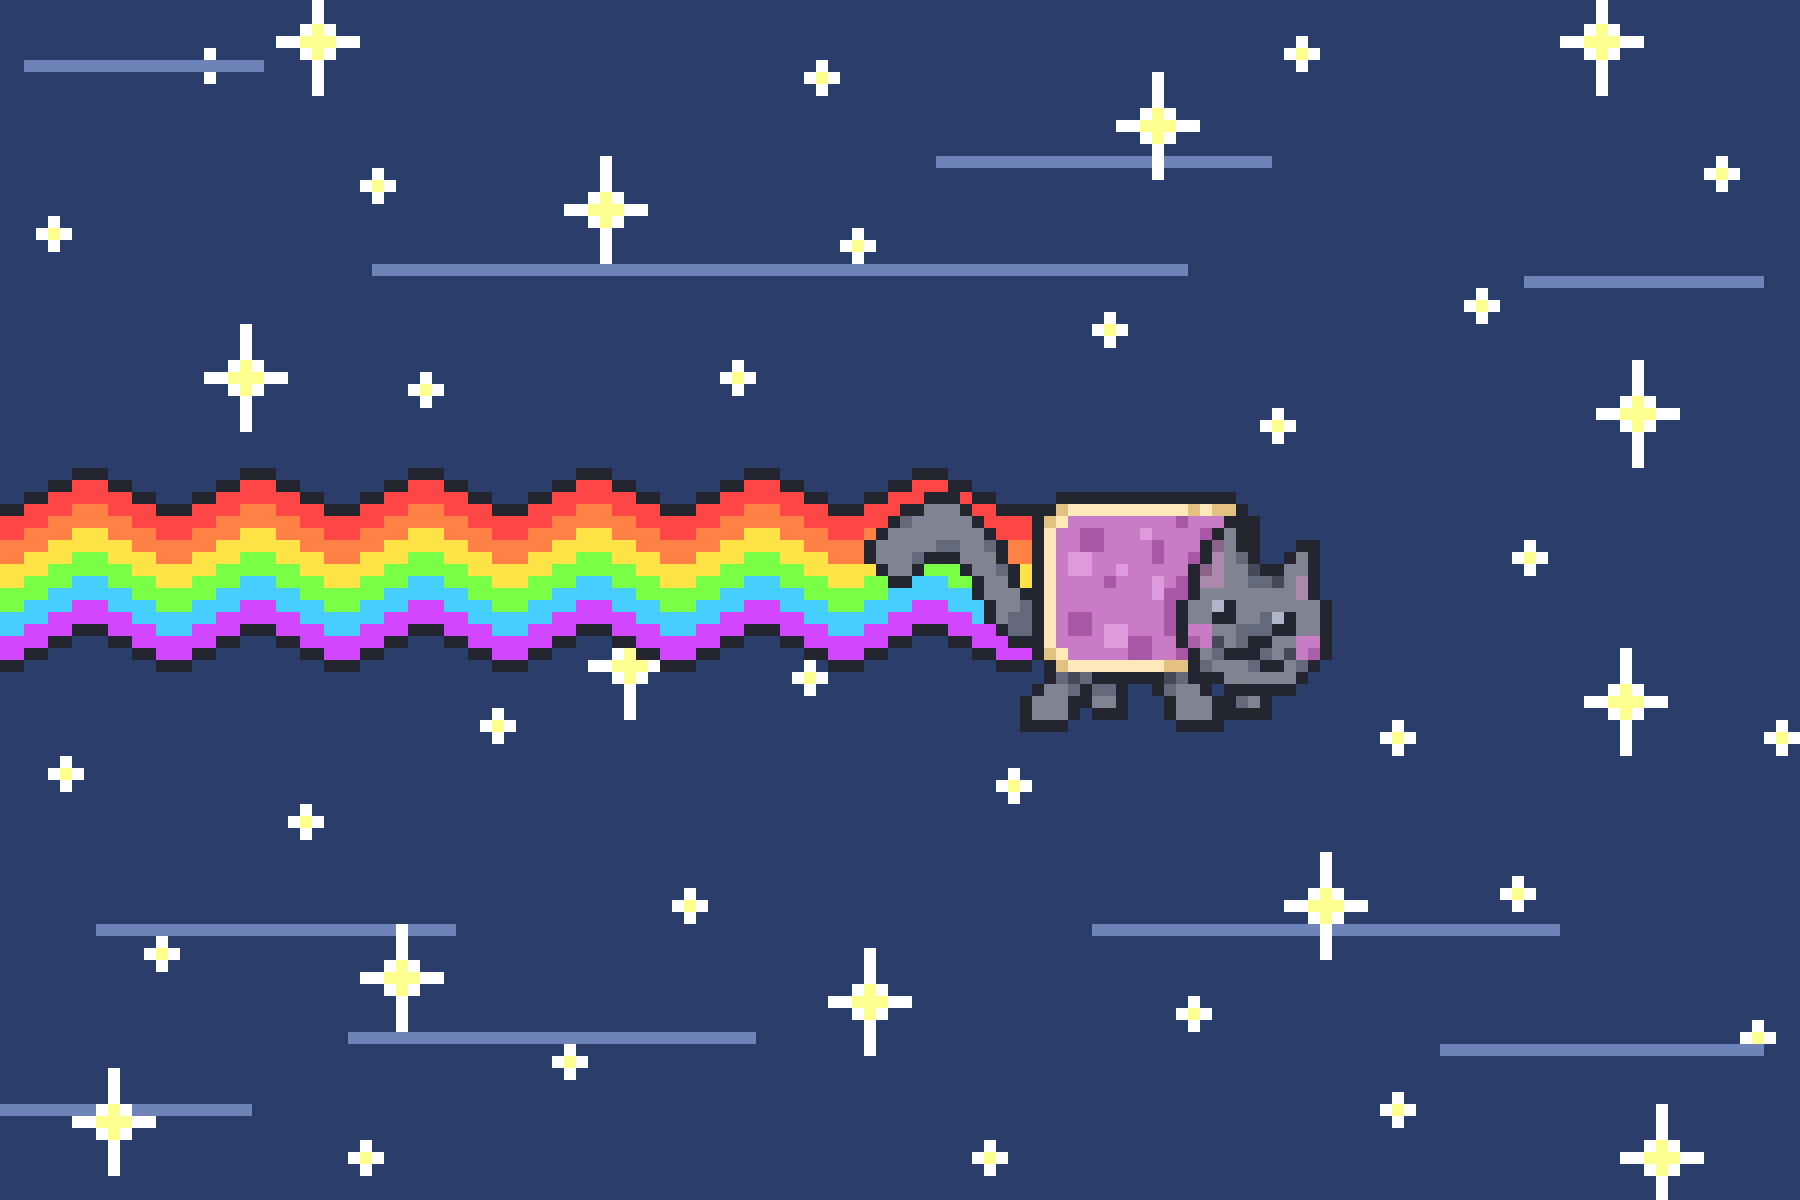 Nyan Cat Gif - GIFcen